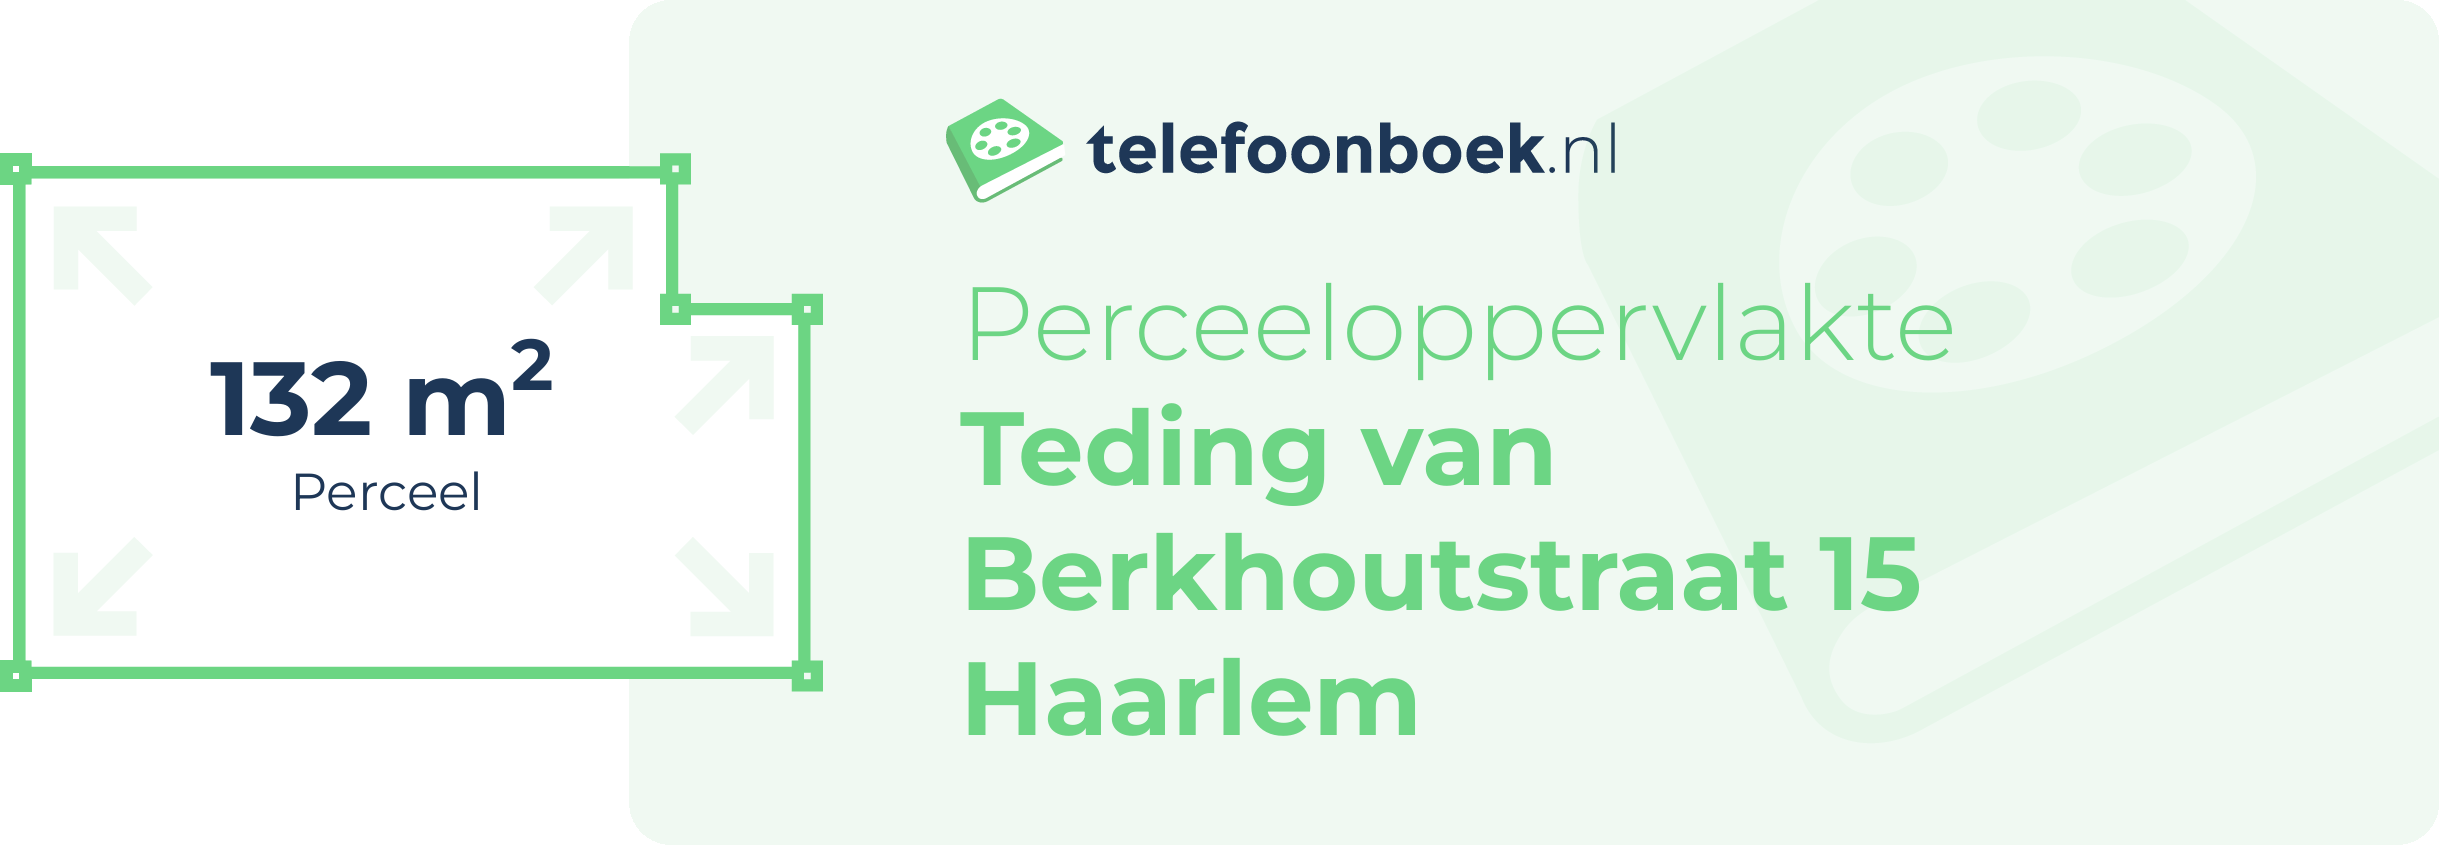 Perceeloppervlakte Teding Van Berkhoutstraat 15 Haarlem